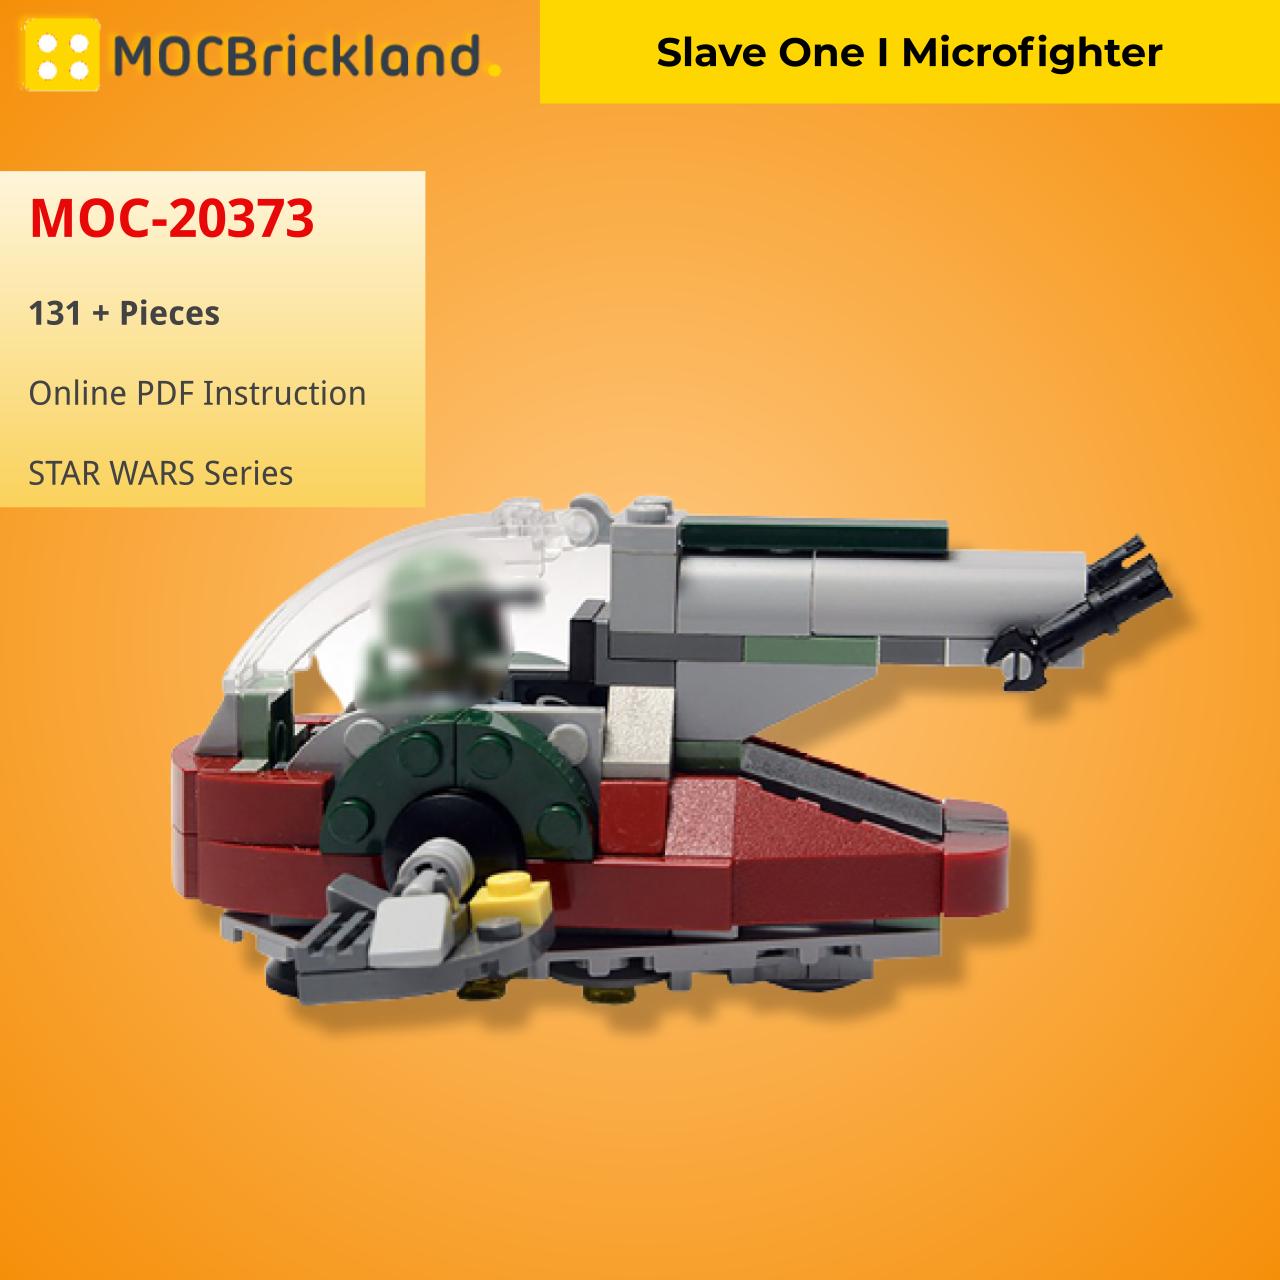 MOCBRICKLAND MOC-20373 Slave One I Microfighter